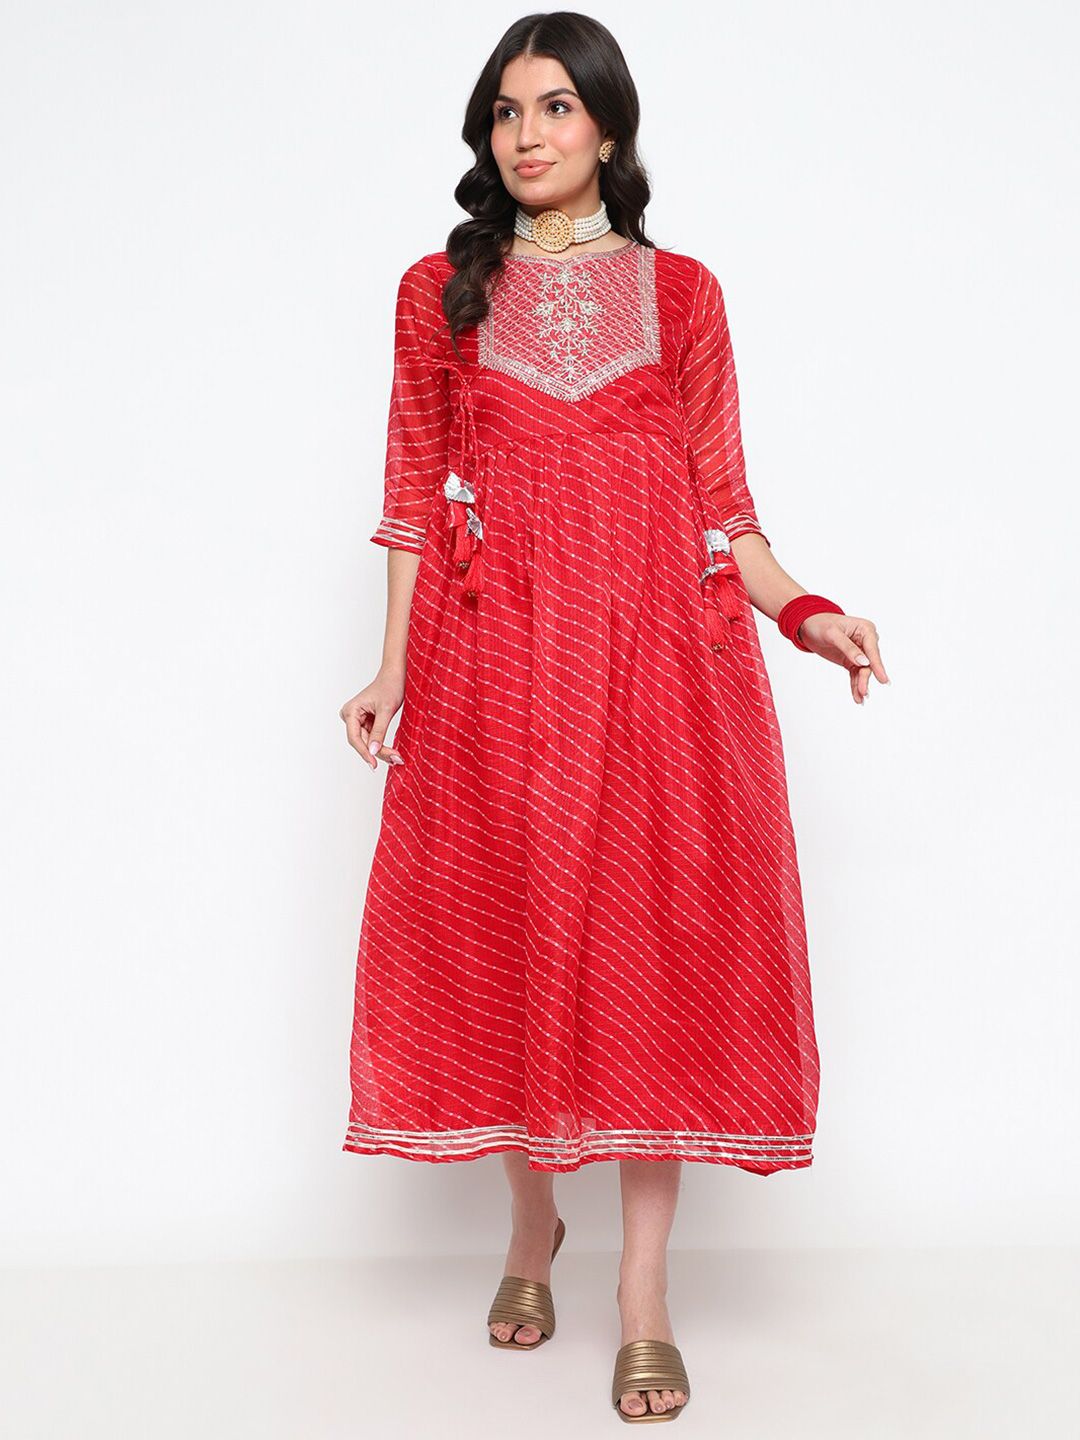 AURIELLA Embroidered Fit & Flare Midi Dress Price in India